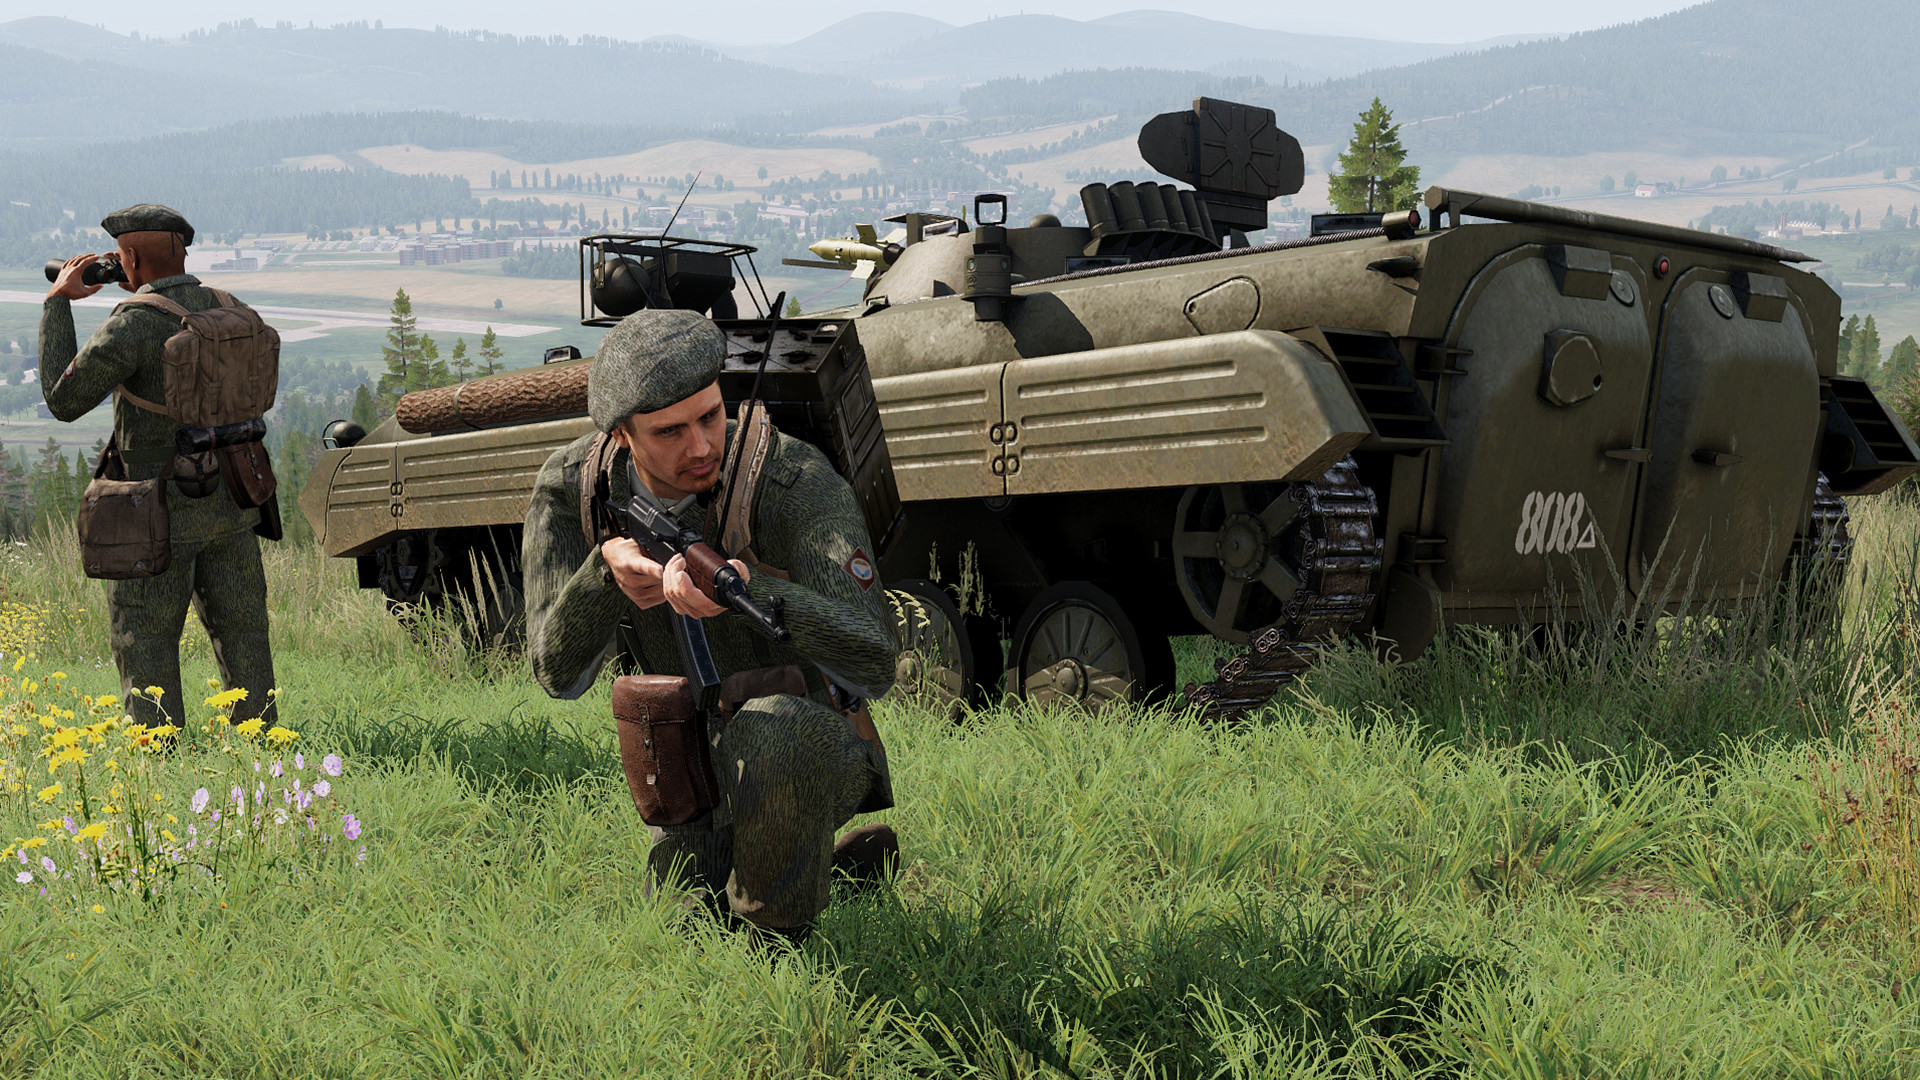 Arma 3 Creator DLC: CSLA Iron Curtain at the best price